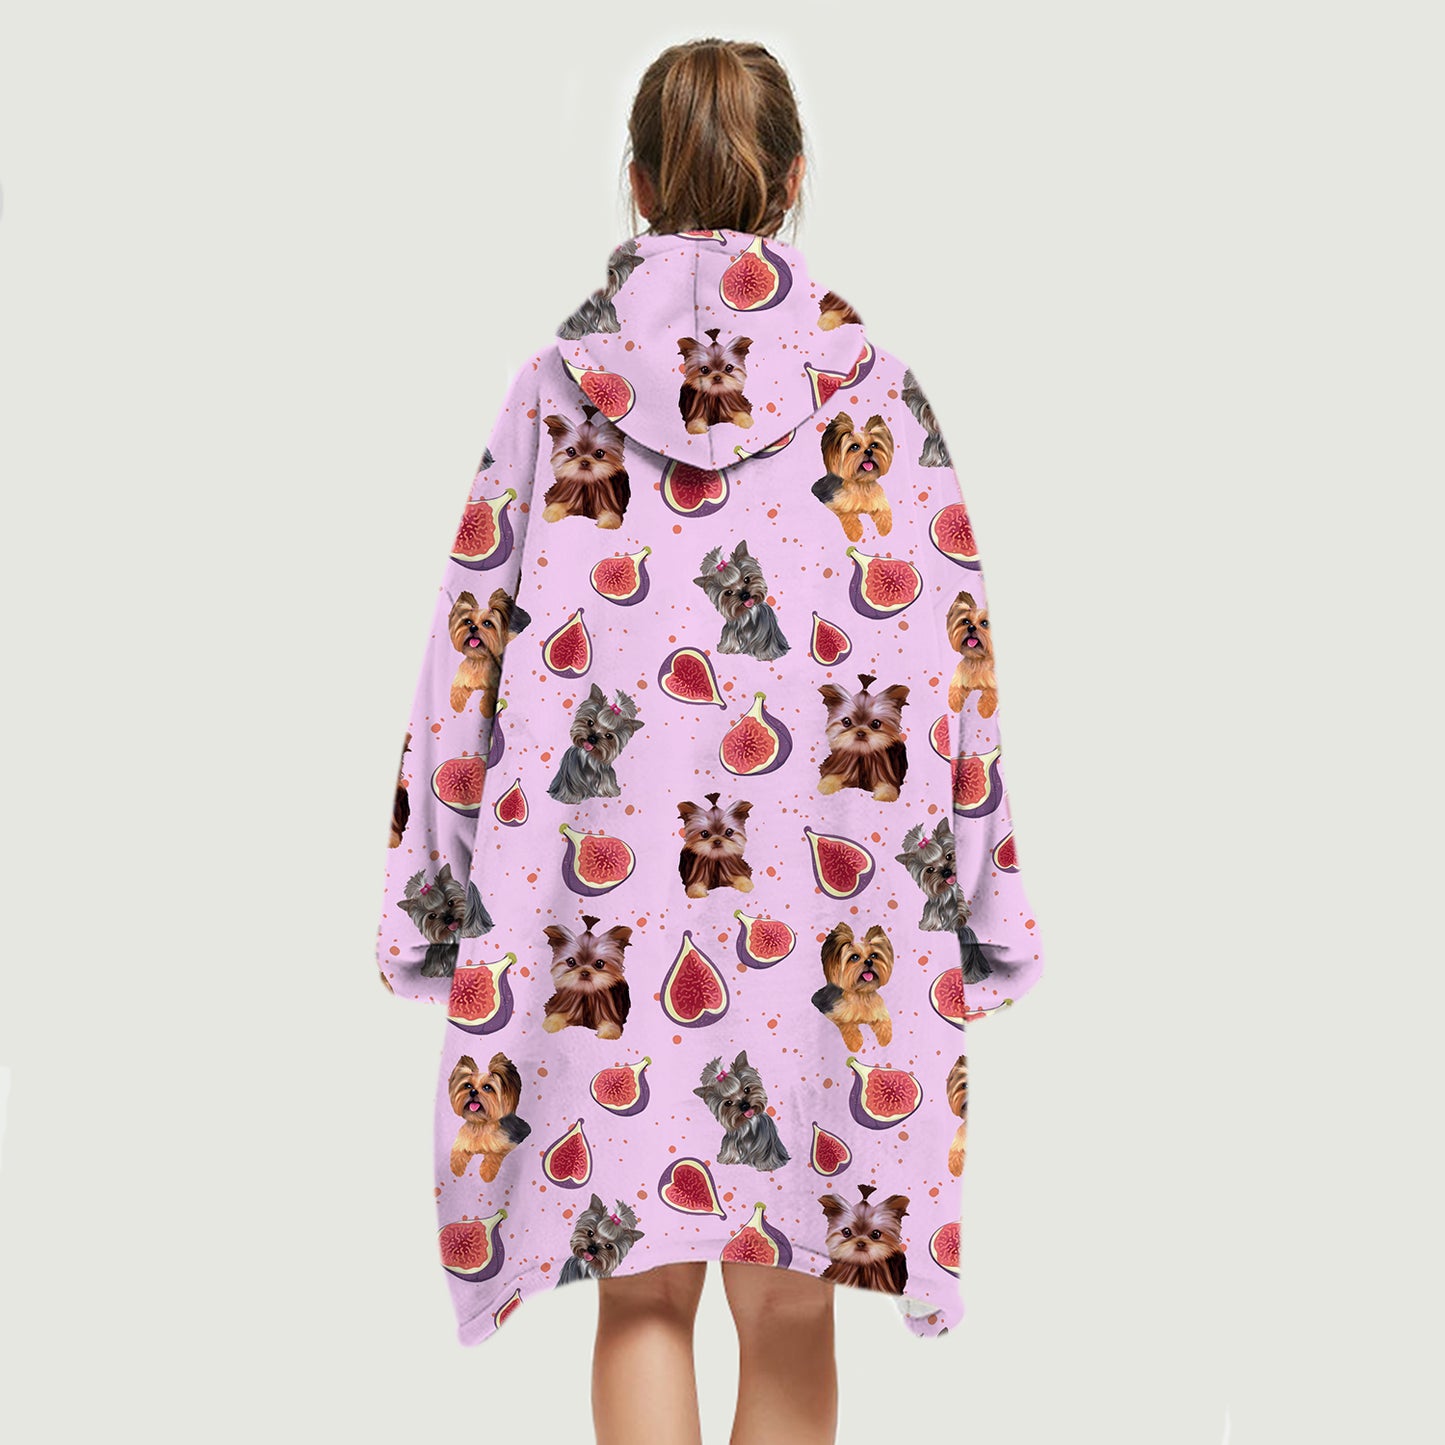 I Love Figs - Yorkshire Terrier Fleece Blanket Hoodie